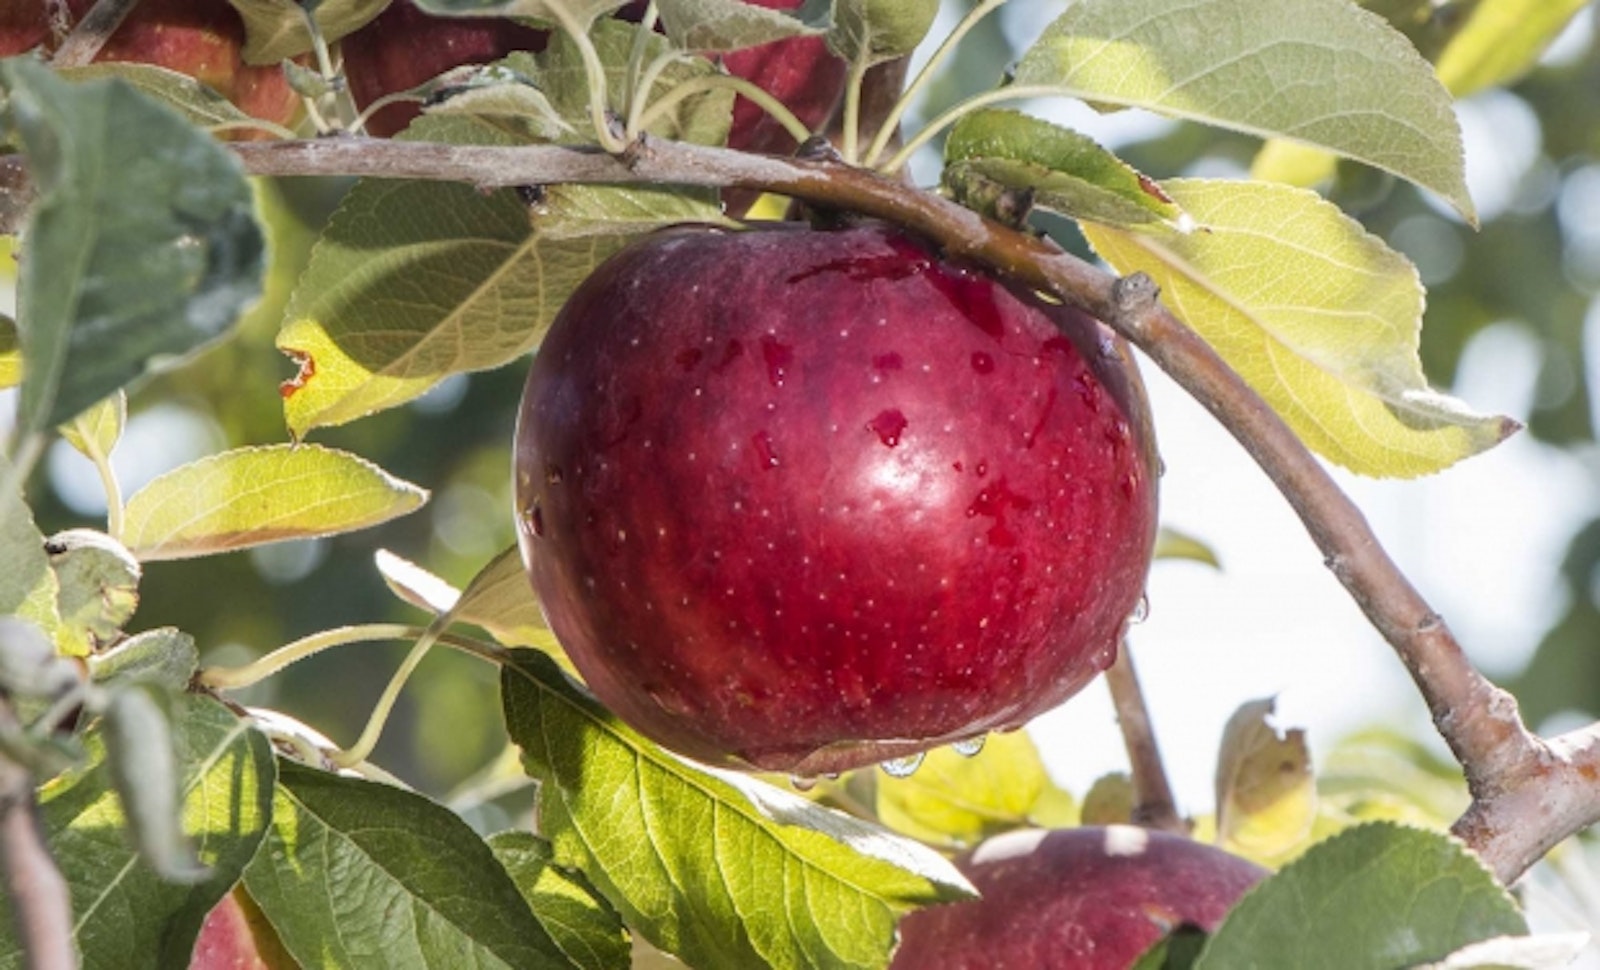 KUOW Meet Washington's Exclusive New Apple Variety